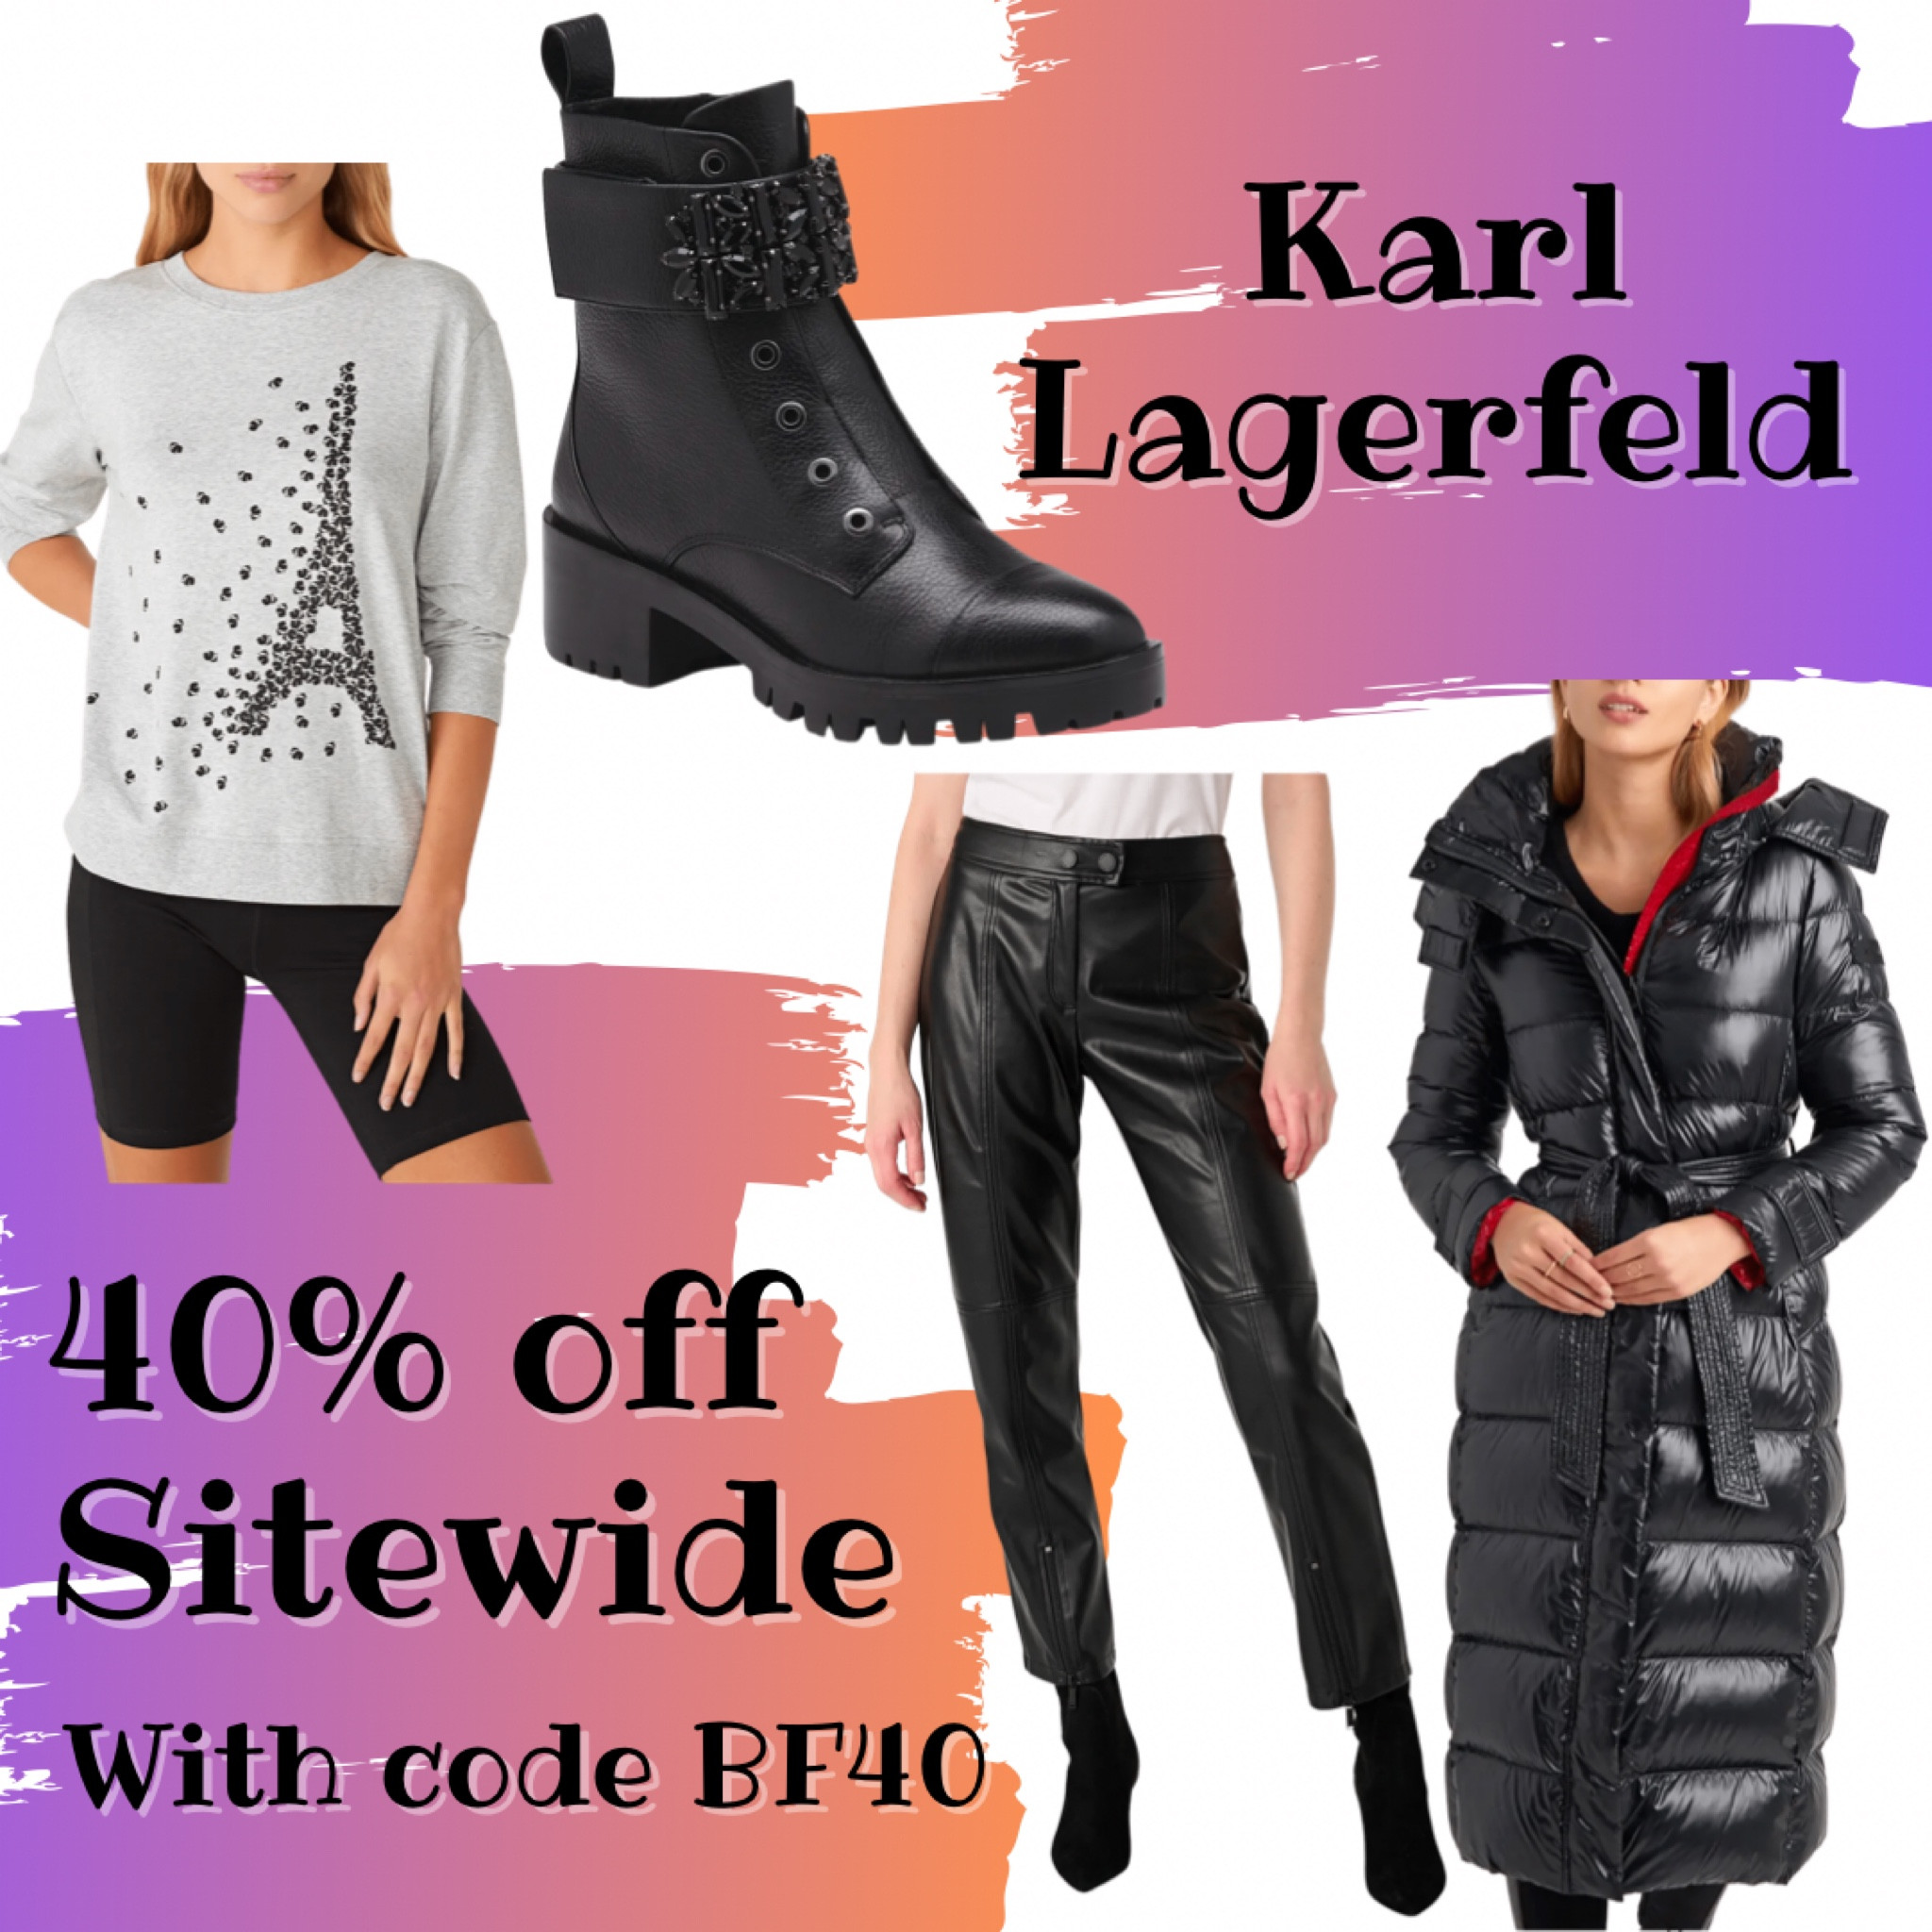 Buy FAUX LEATHER ANKLE ZIPPER PANTS Online - Karl Lagerfeld Paris